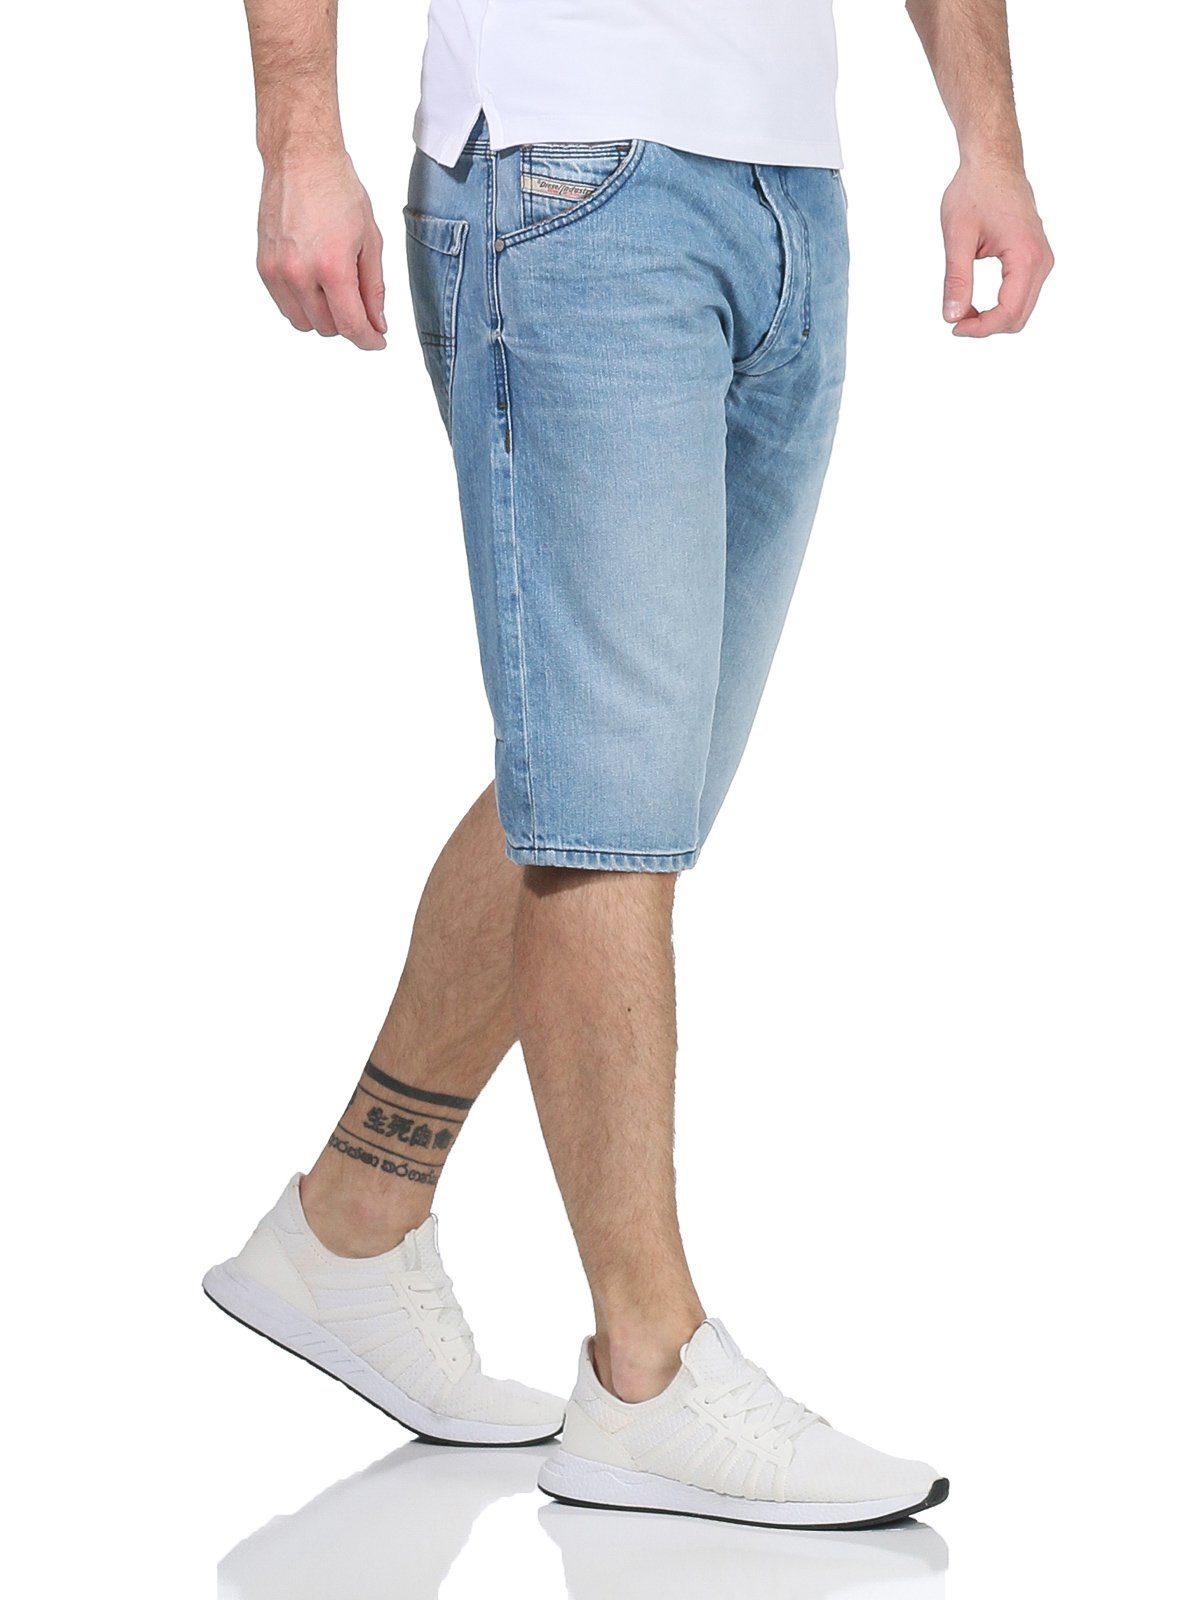 Used-Look Shorts Diesel R18K5 Herren Jeans Hose Jeansshorts RG48R Kroshort Shorts, kurze dezenter Hellblau